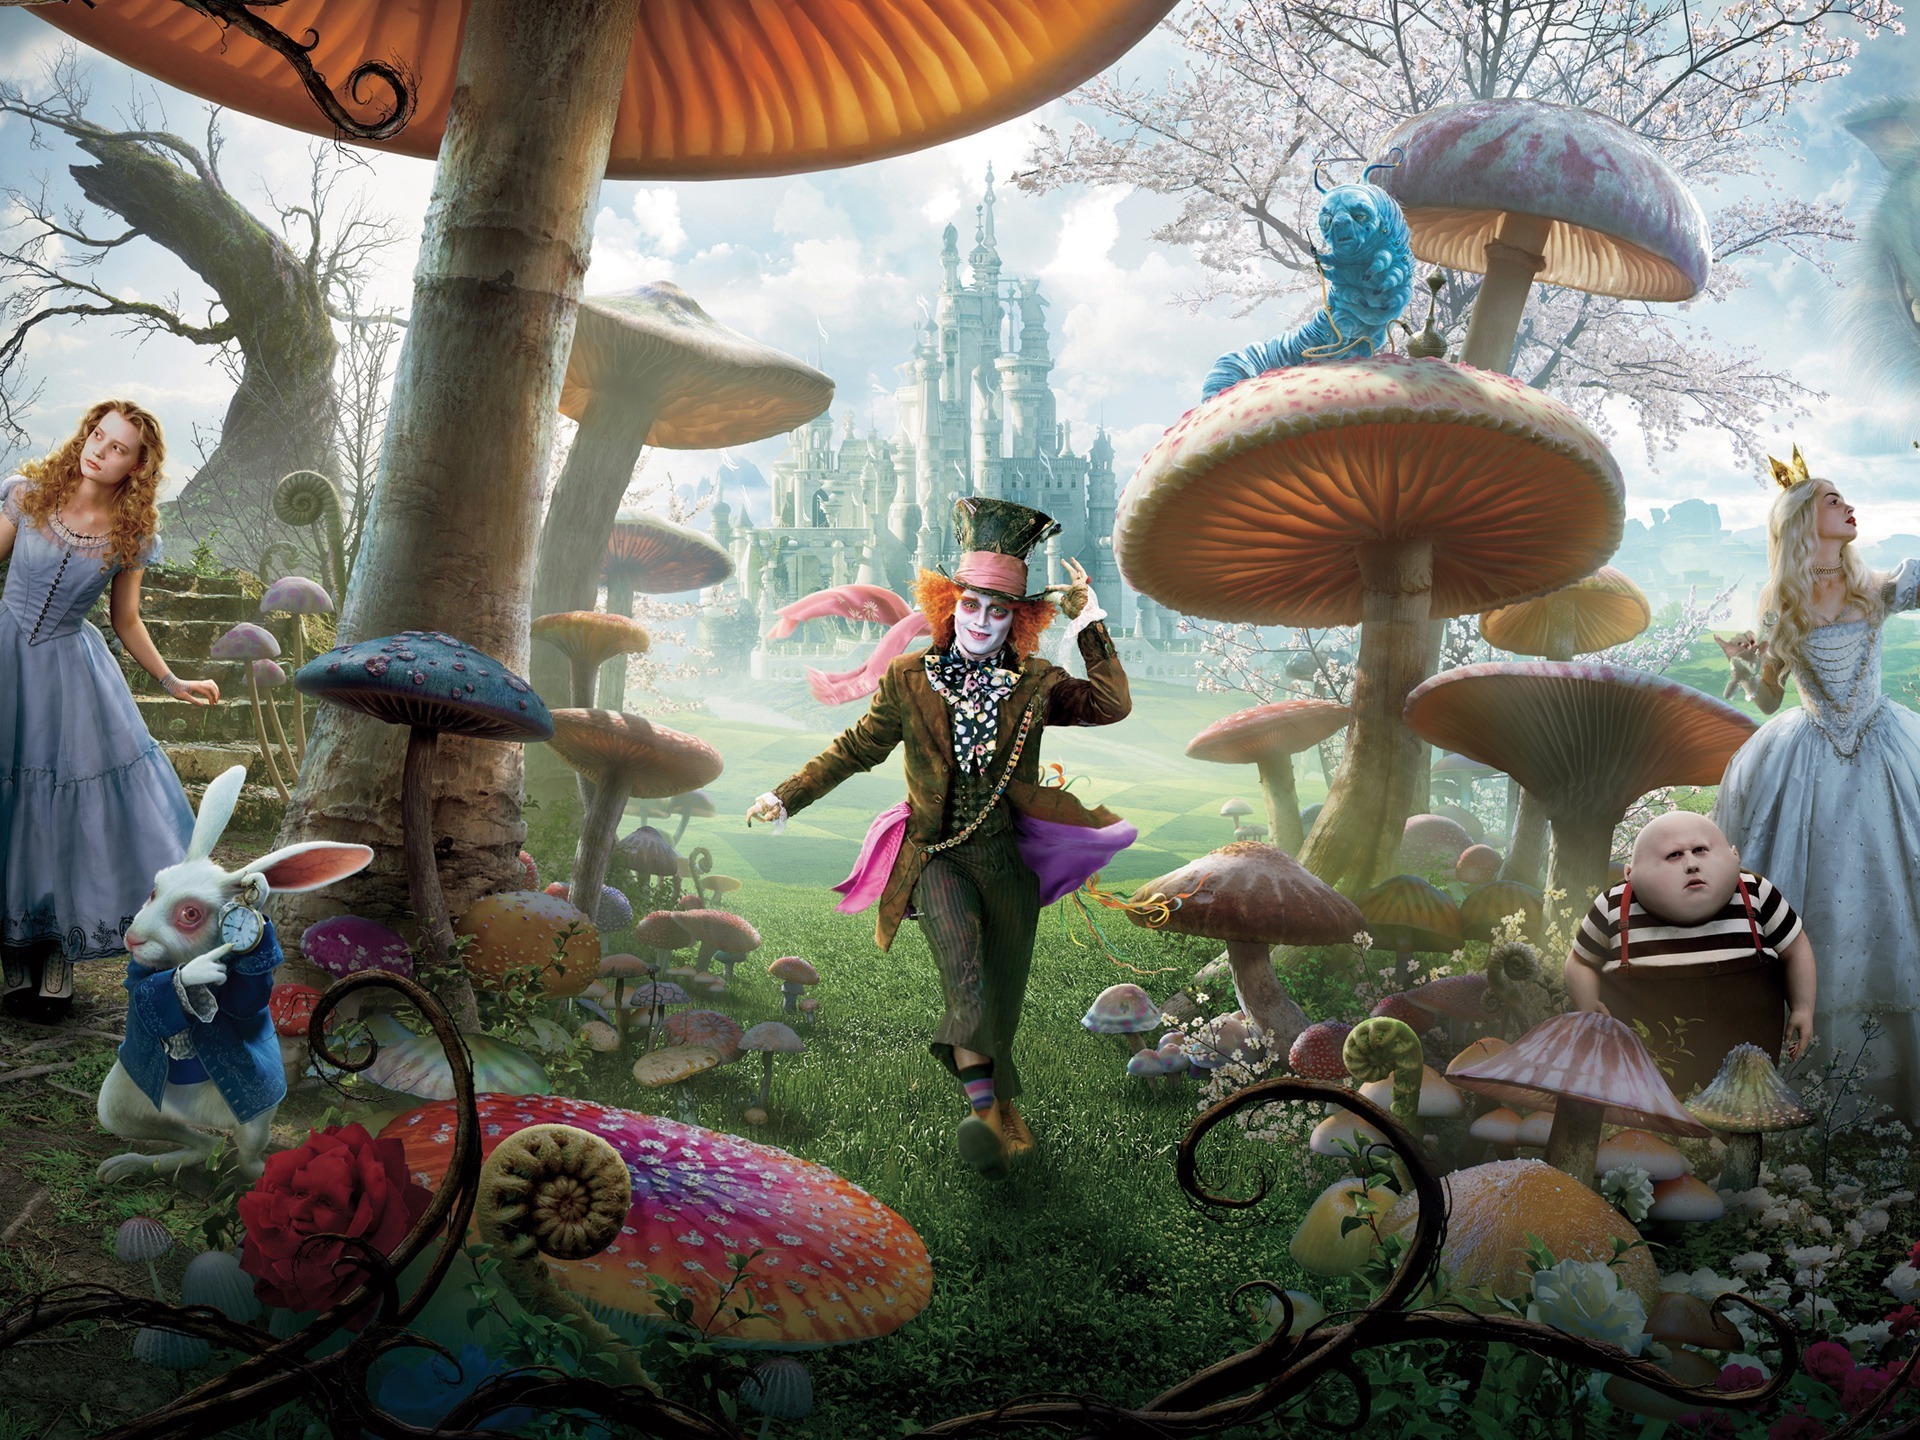 Alice In Wonderland Wallpaper